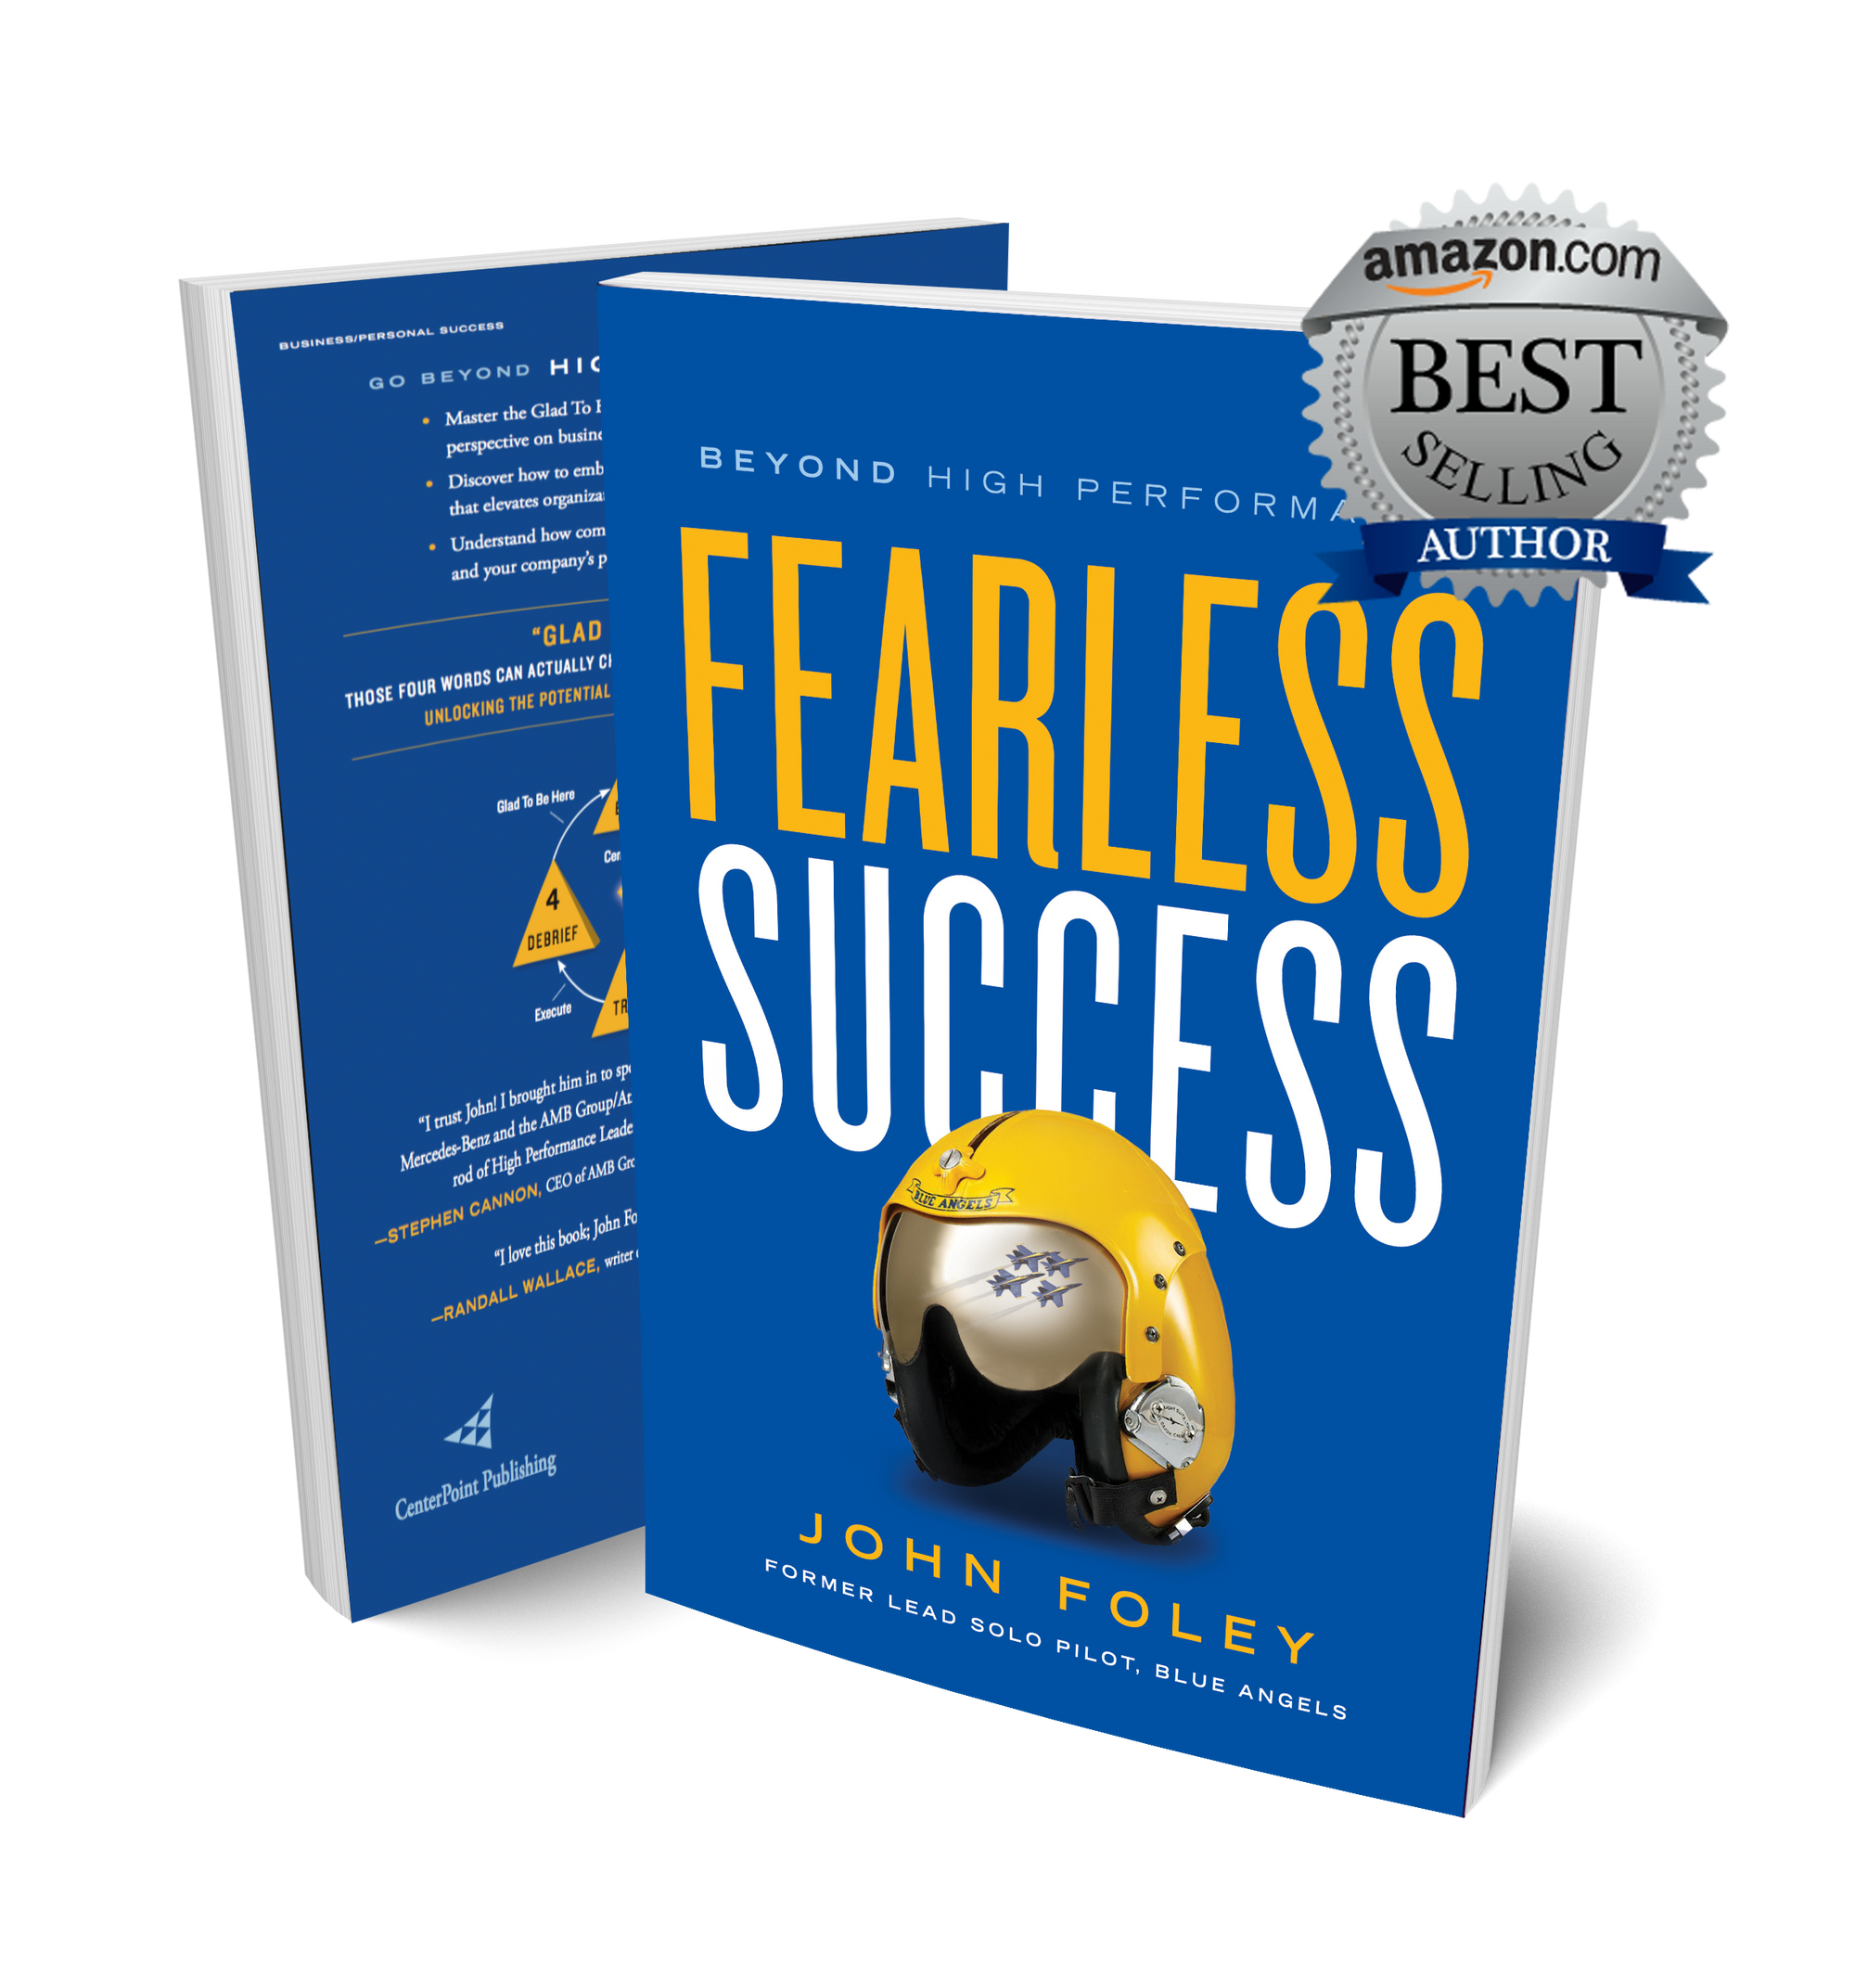 Fearless Success: Beyond High Performance